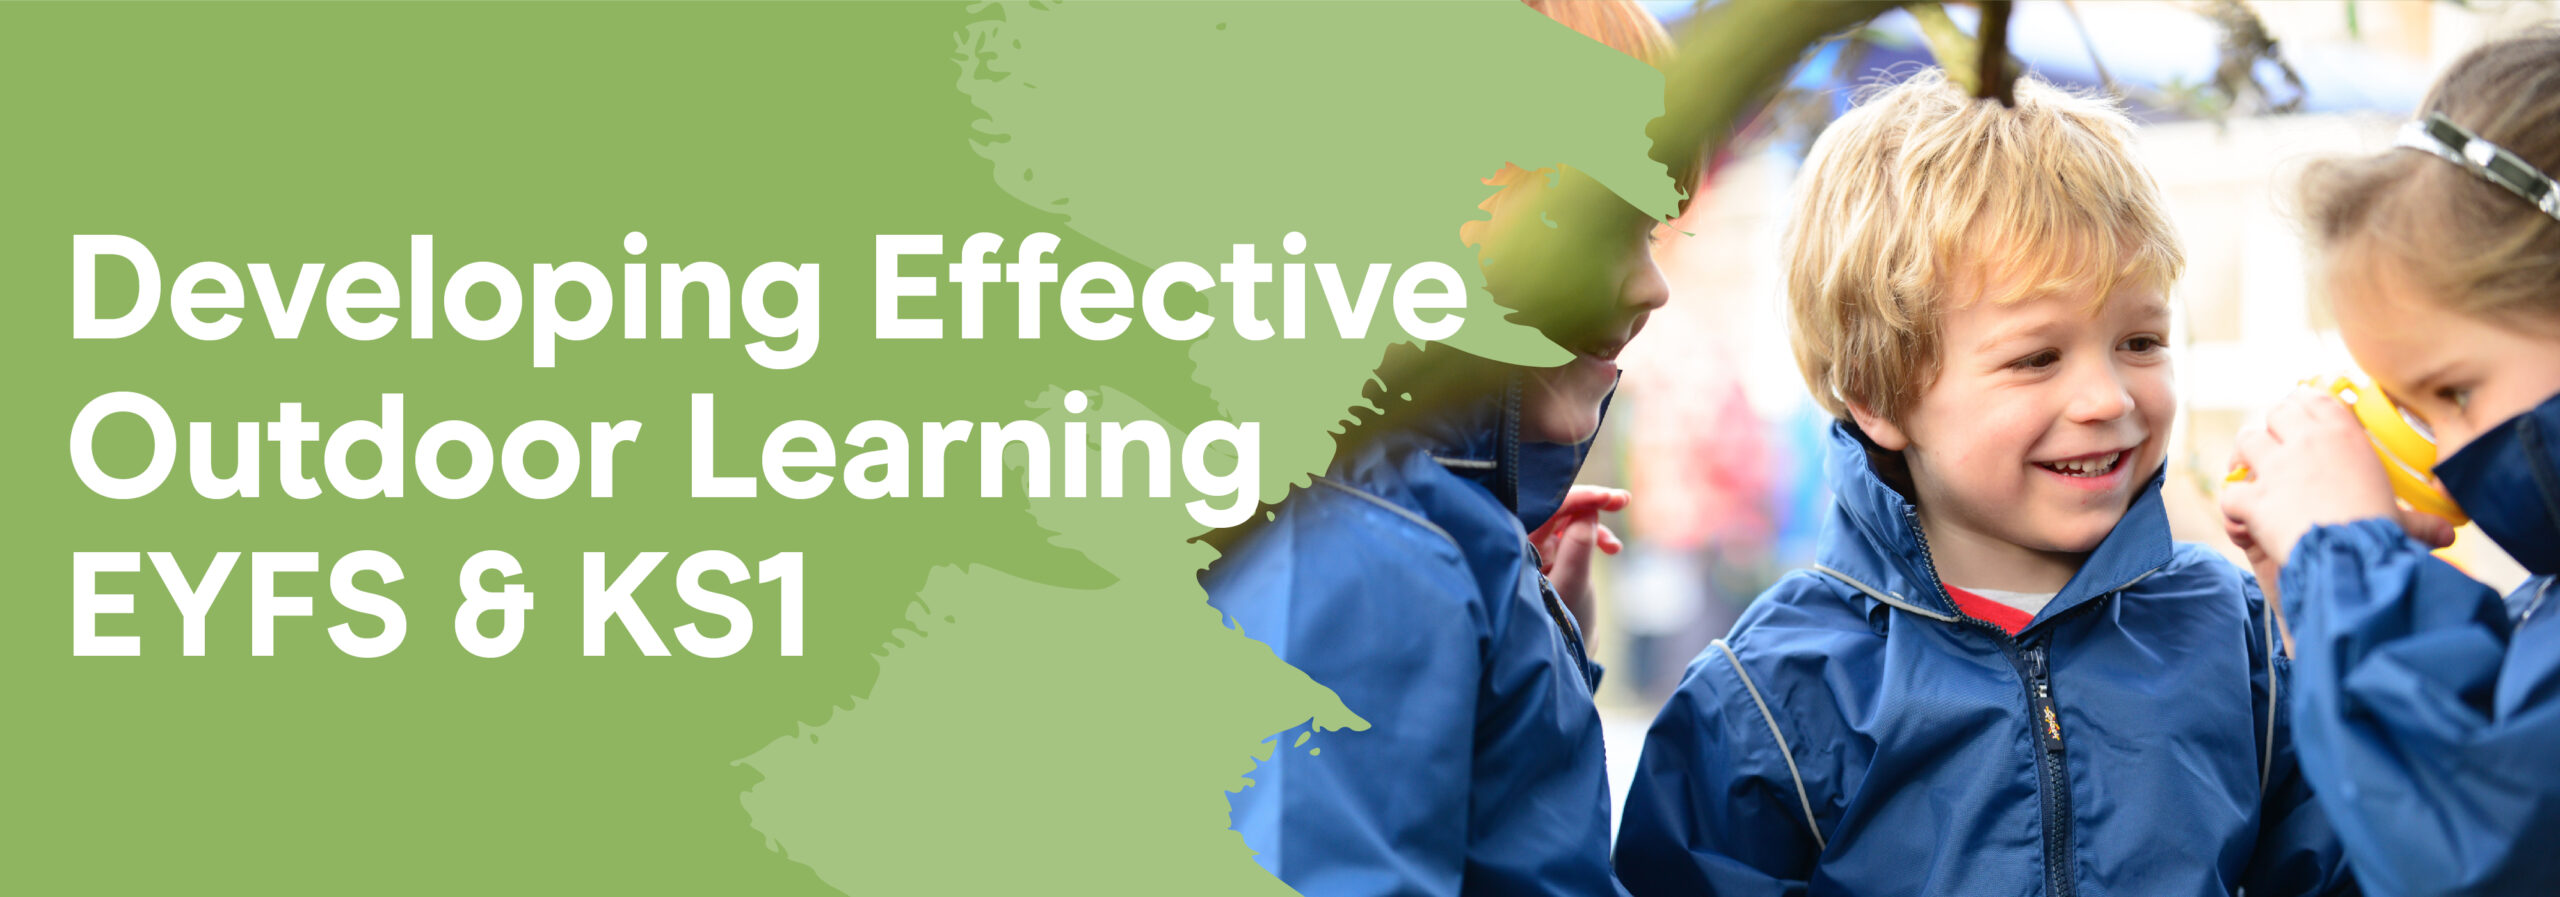 Developing Effective Outdoor Learning EYFS & KS1 Banner